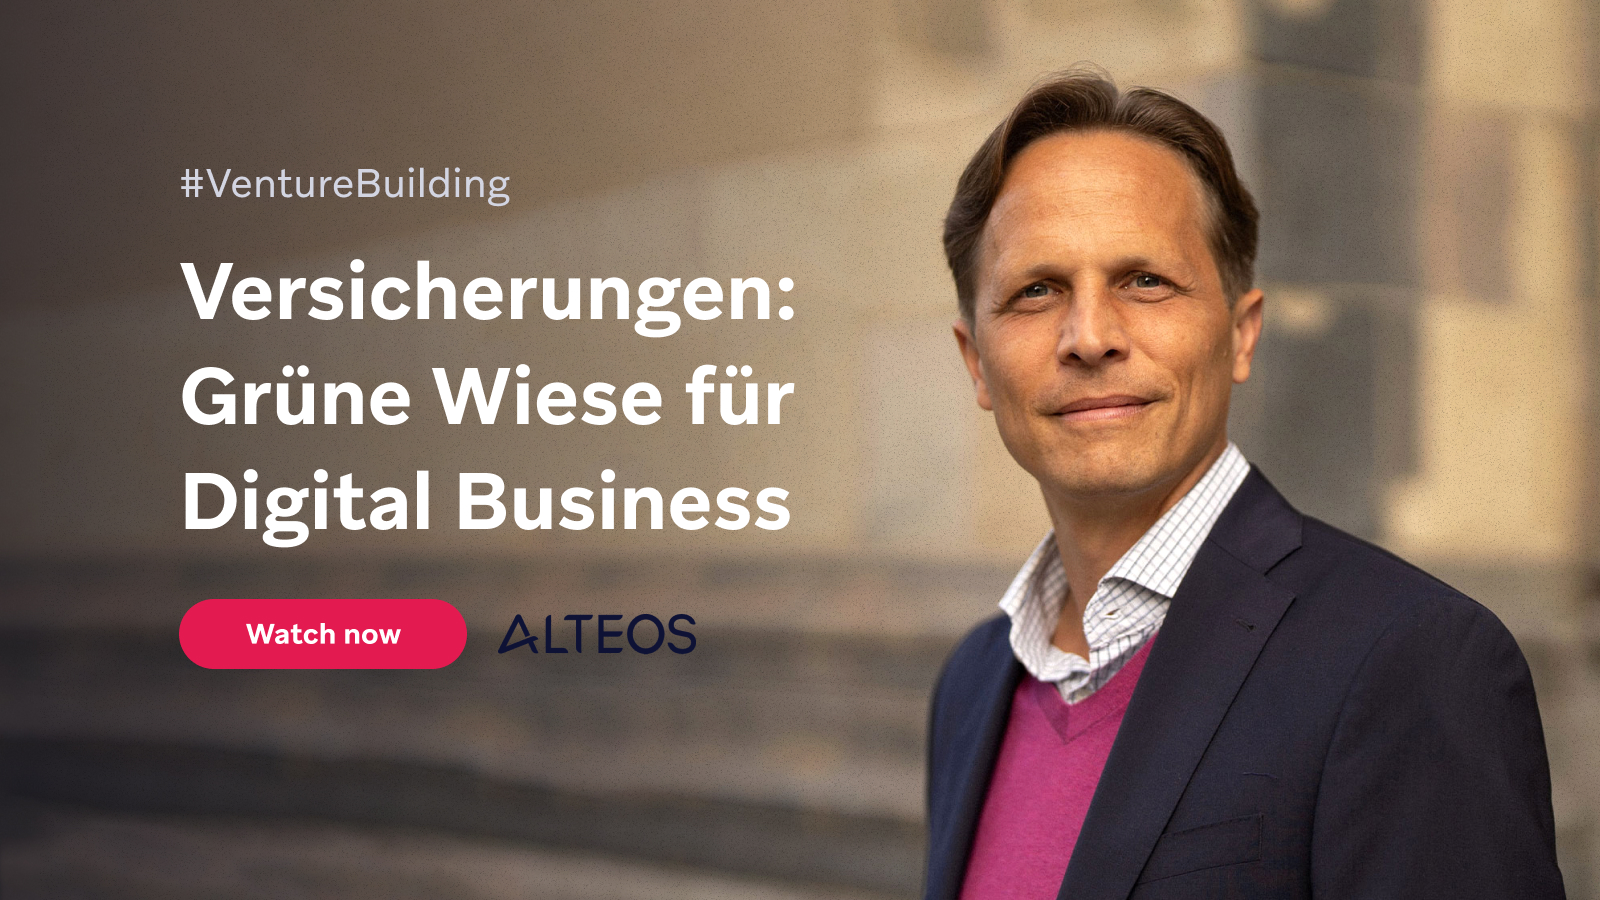 Sebastian-Sieglerschmidt-Etribes-Network-Alteos-Venture-Building-Digitalisierung-Versicherung-Insurance